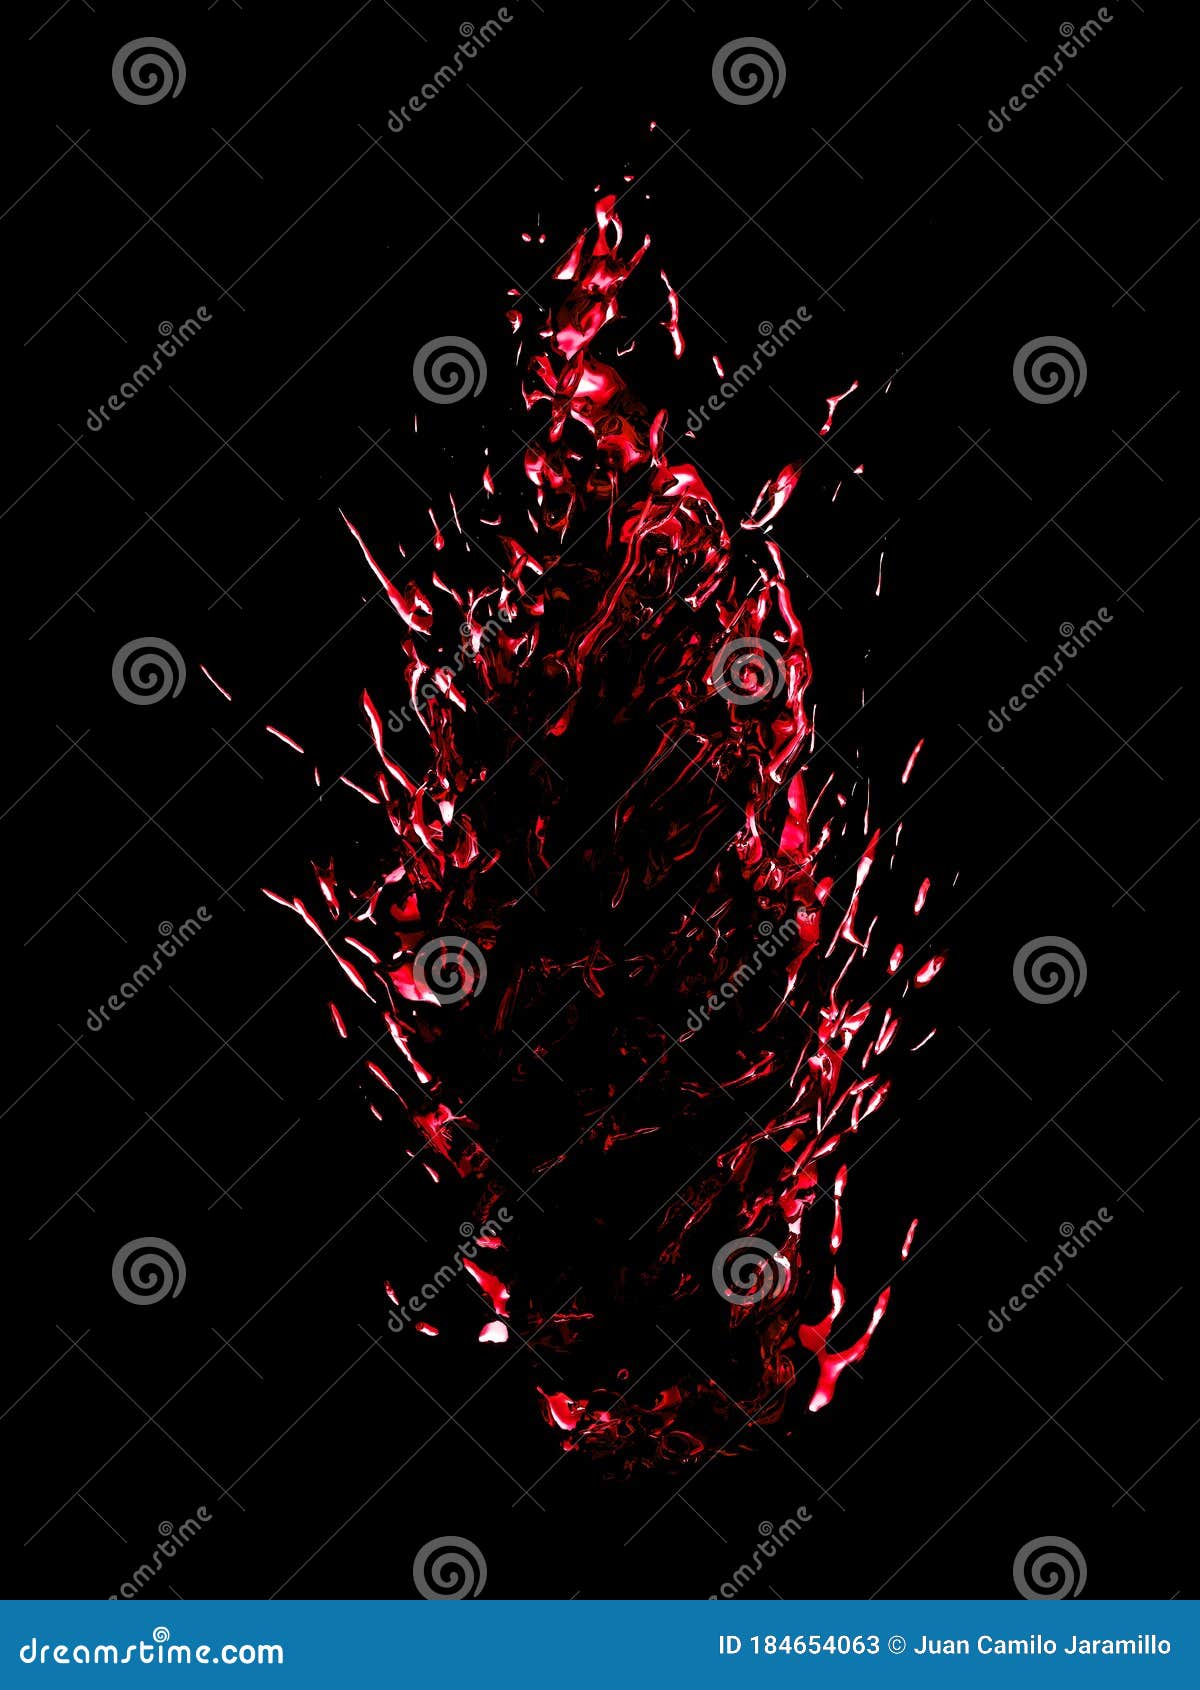 red water splash  on a black background